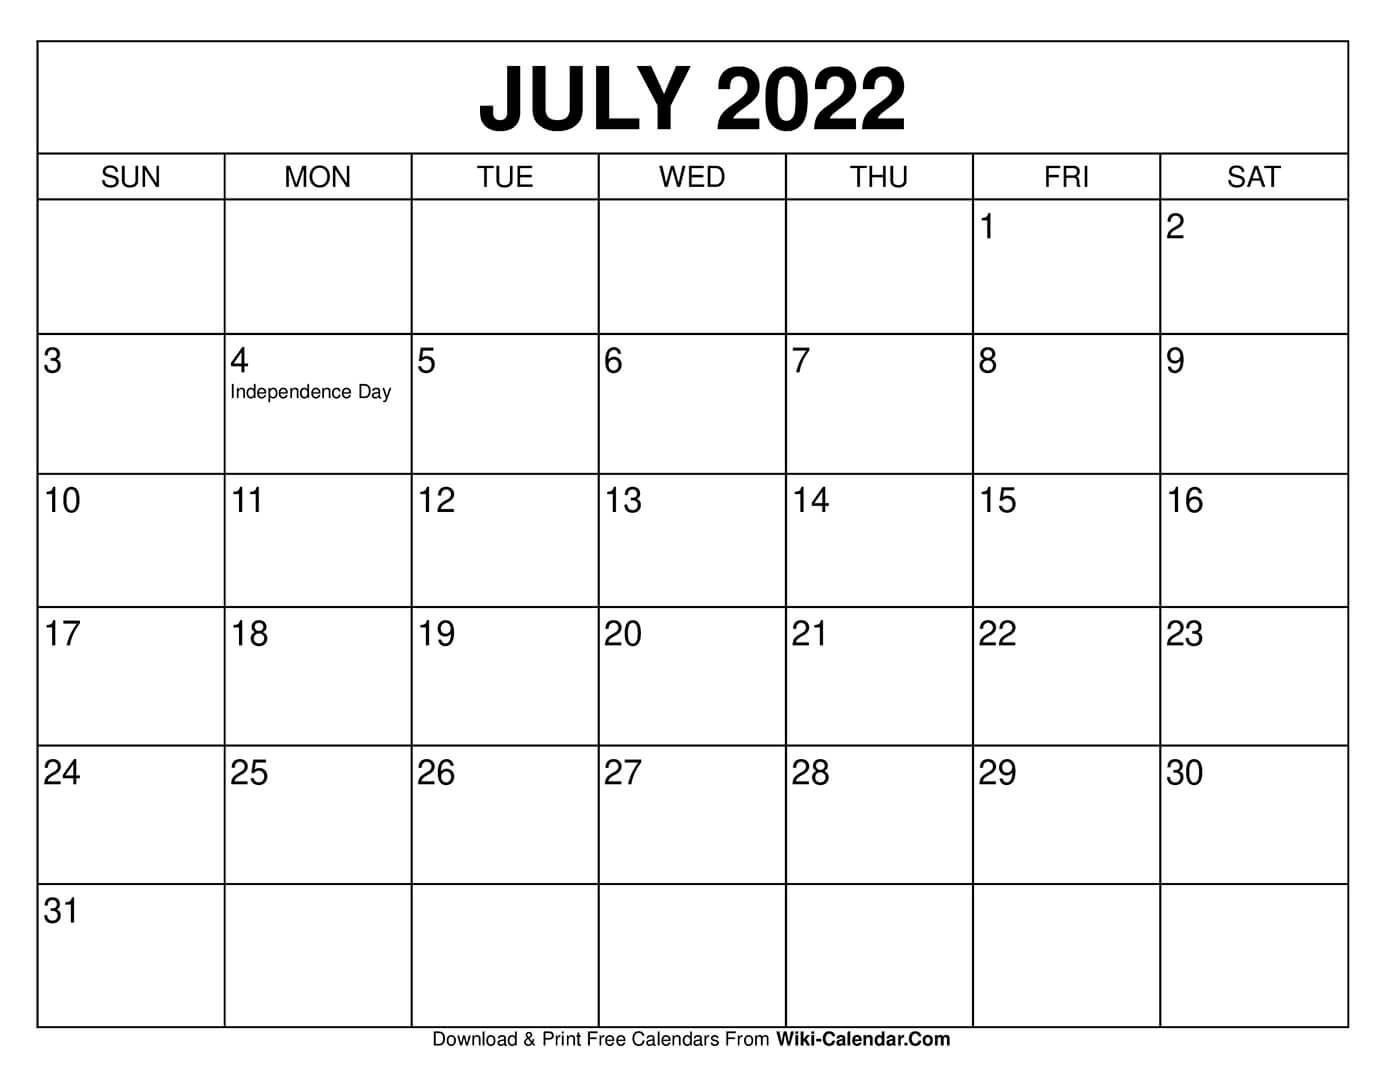 Get May 24 2022 Calendar